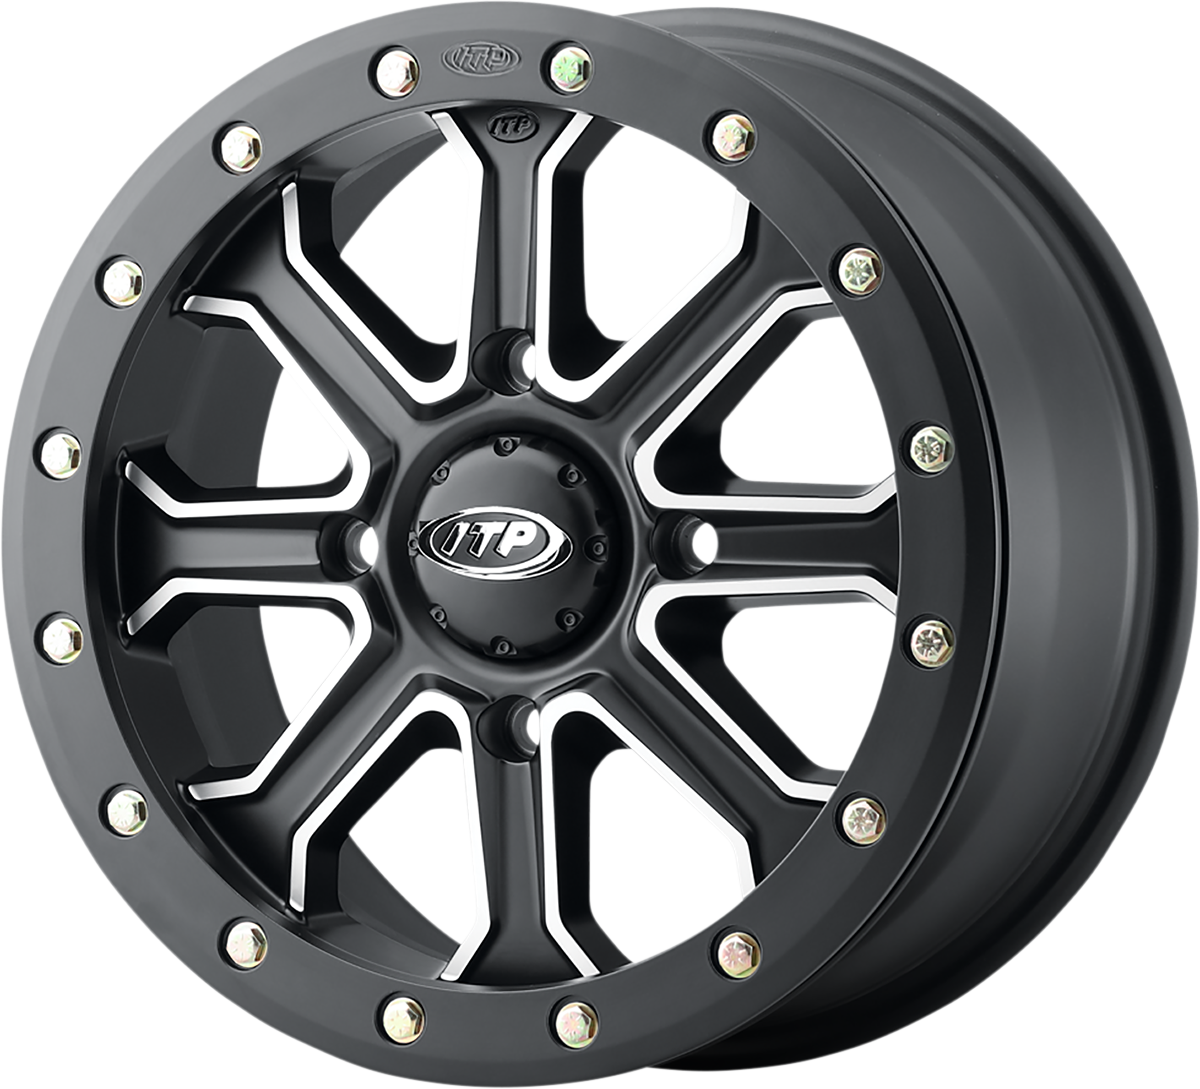 ITP Wheel - Inertia - Front - Black - 14x7 - 4/137 - 6+1 (+50 mm) 1422524727B